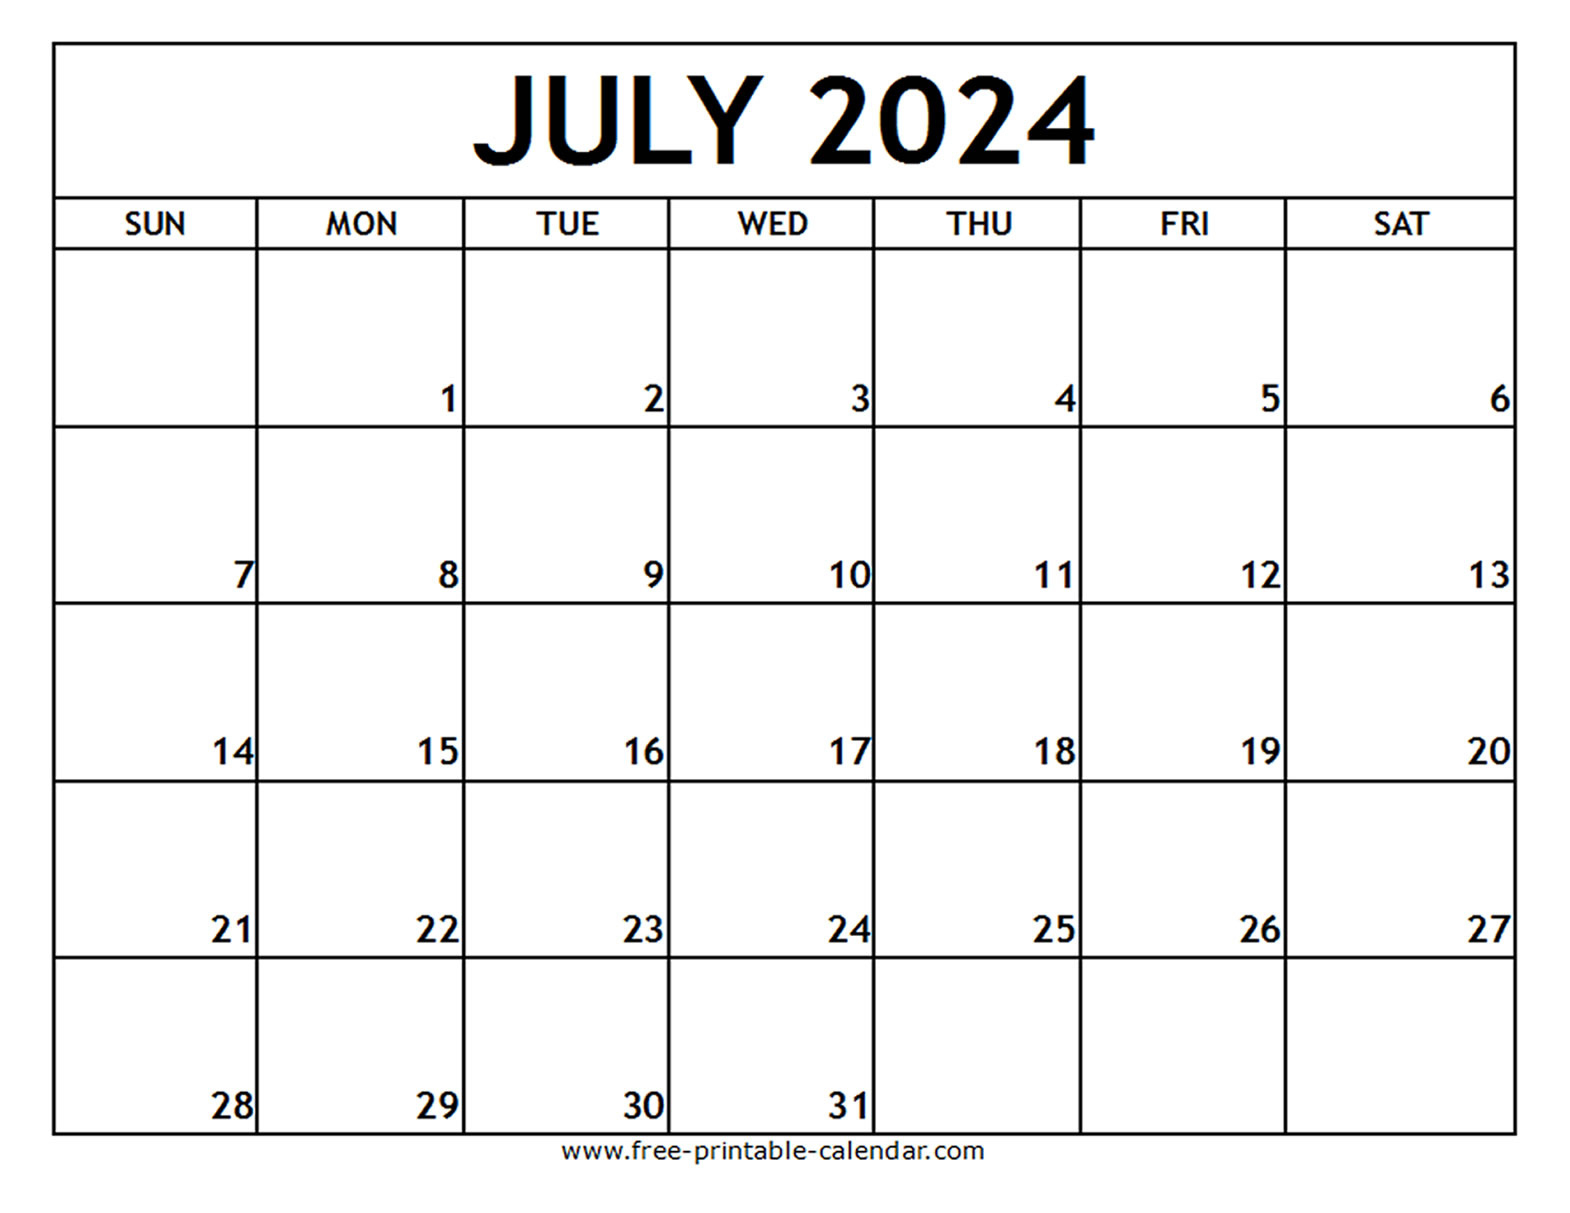 July 2024 Printable Calendar - Free-Printable-Calendar regarding Free Printable Calendar 2024 July